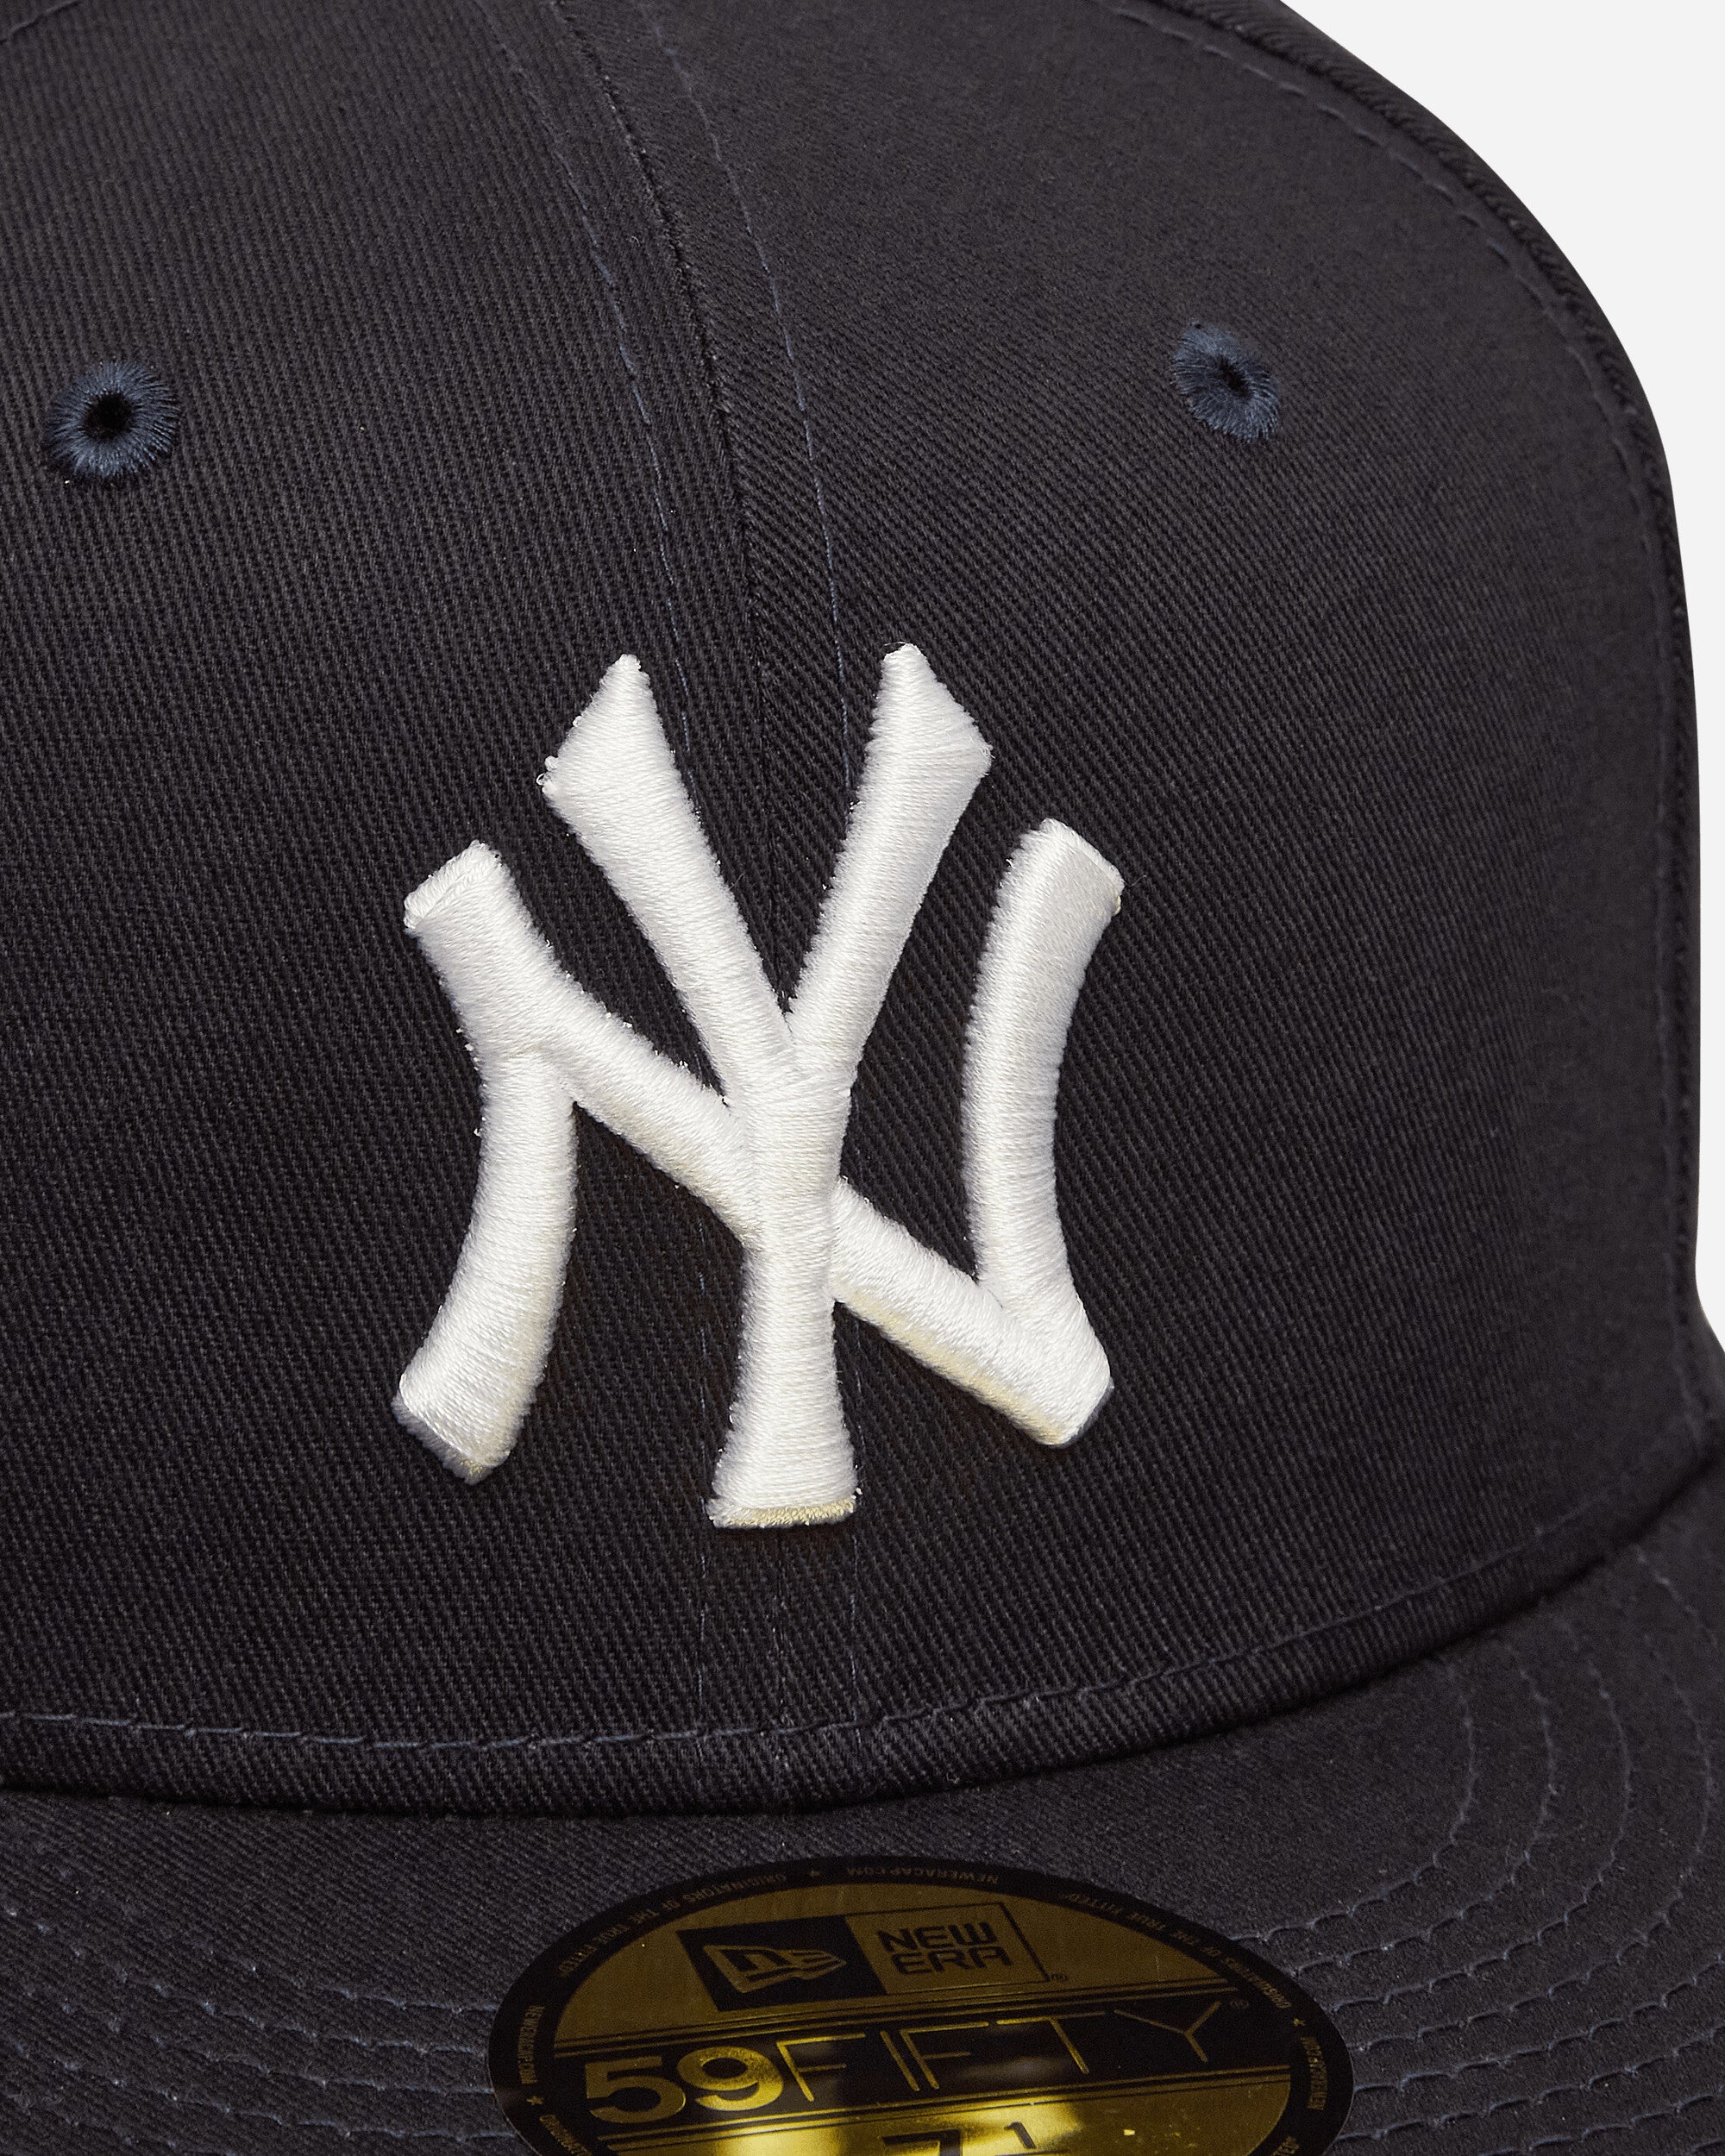 New Era 5950 Oakland New York Yankees Navy Hats Caps 60364381 NVYGRA